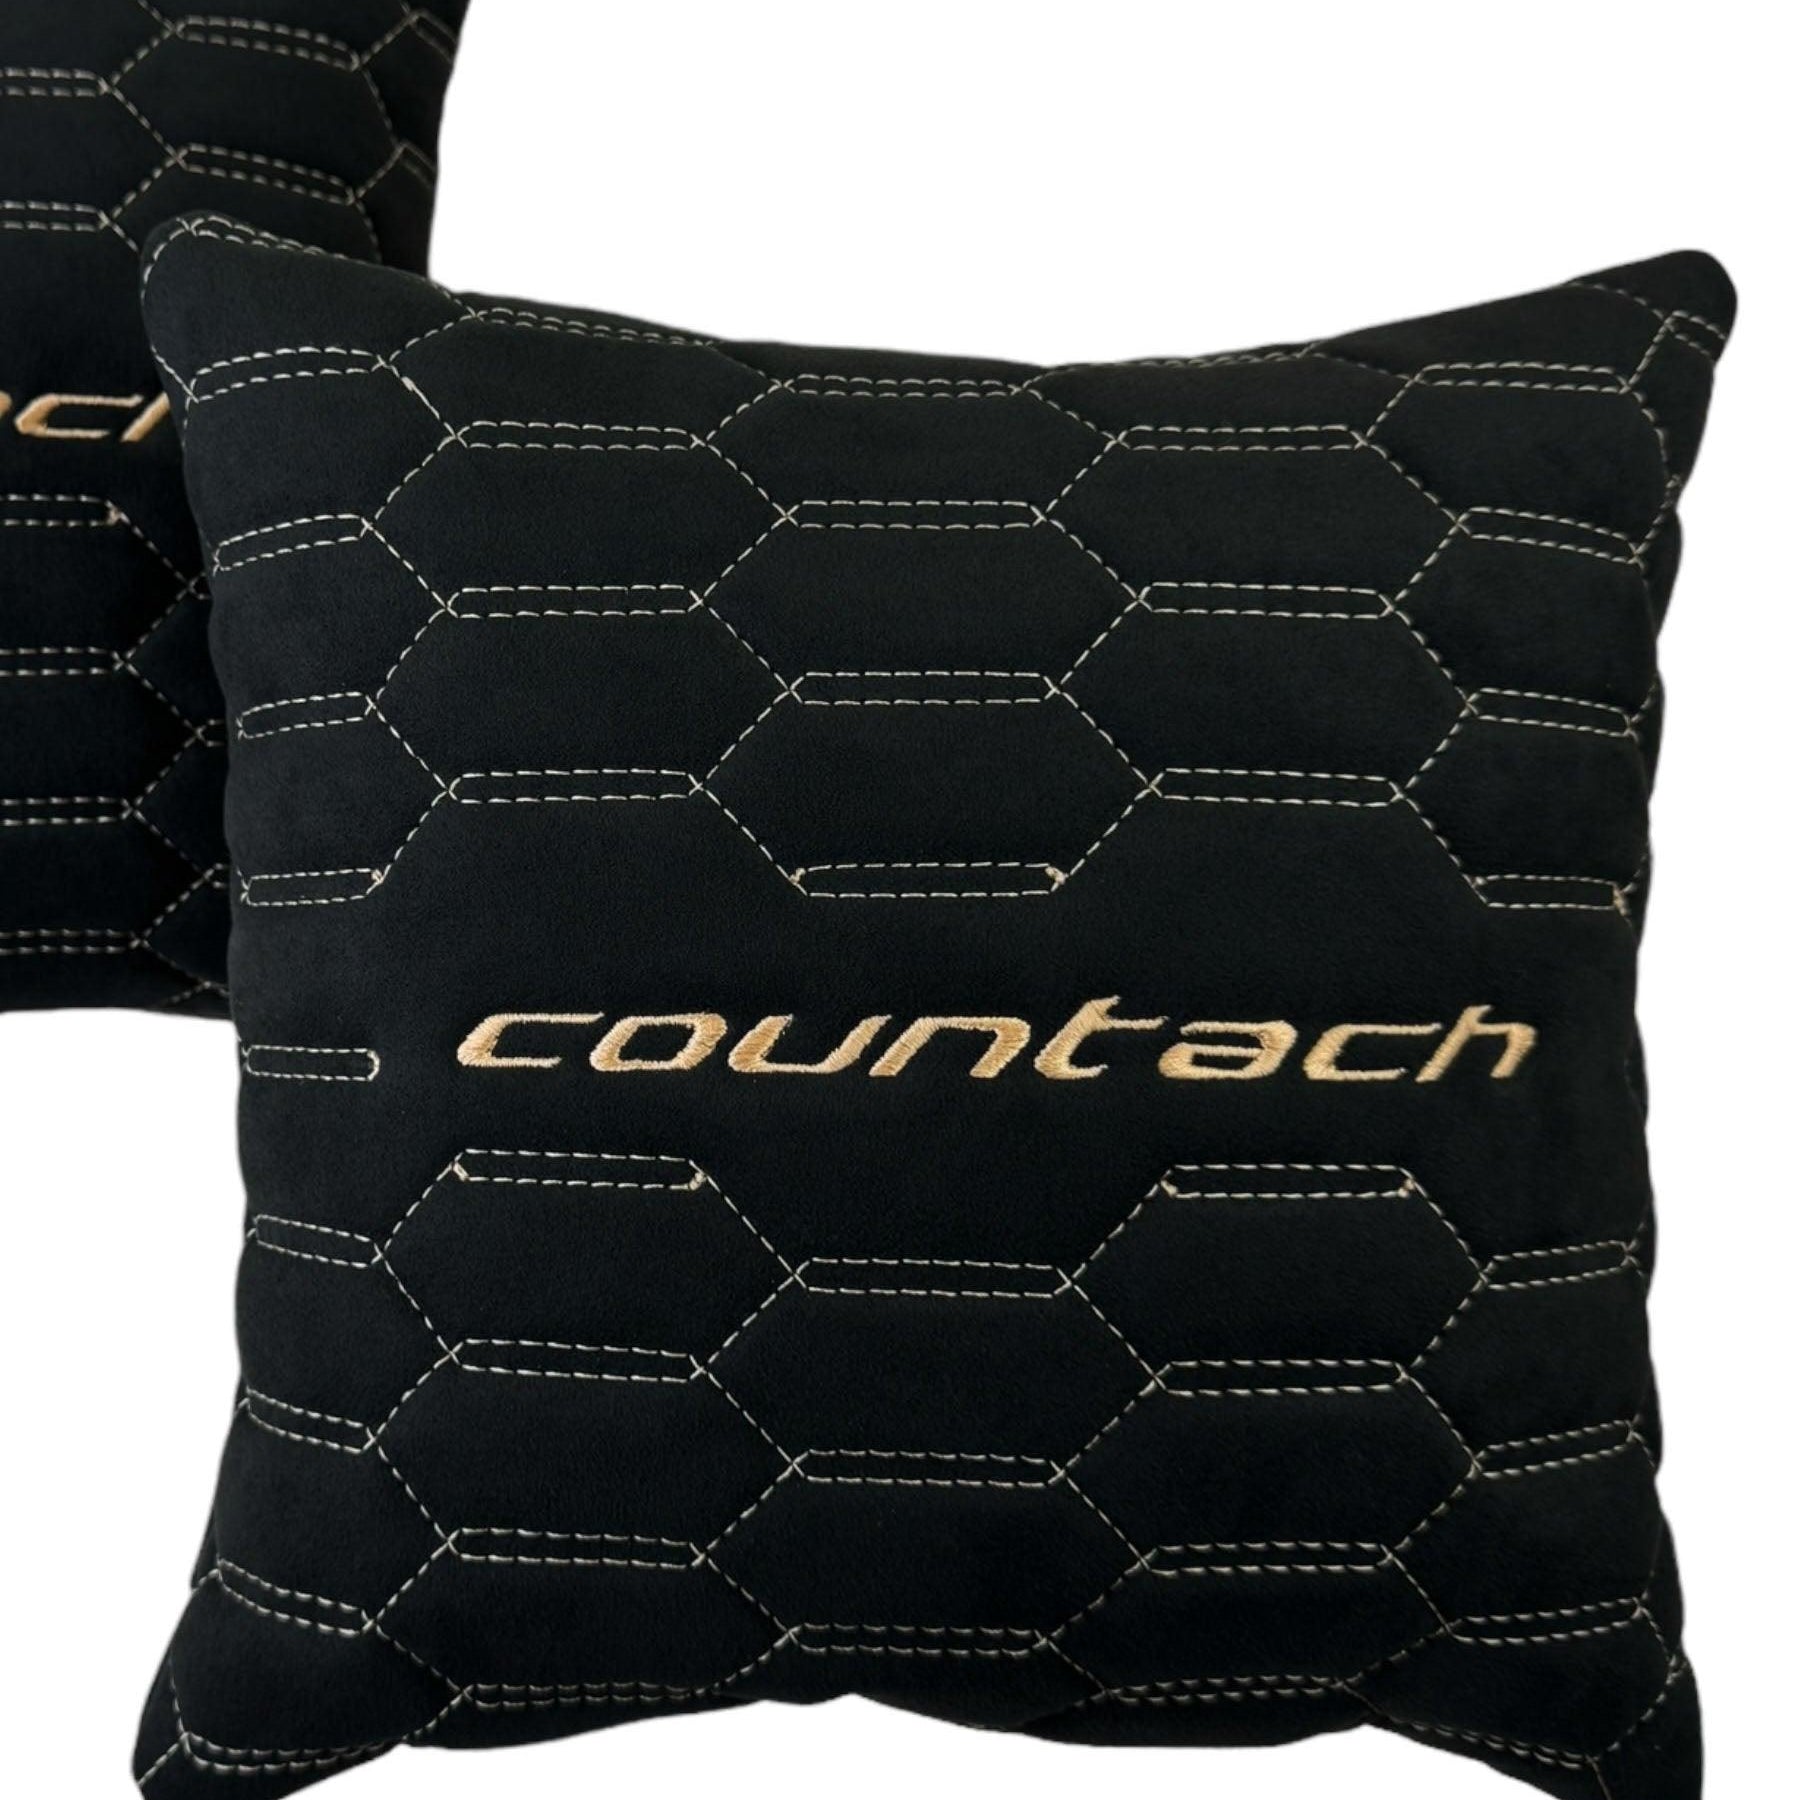 Black Alcantara Leather Pillows Countach Set of 2 Tan Sewing